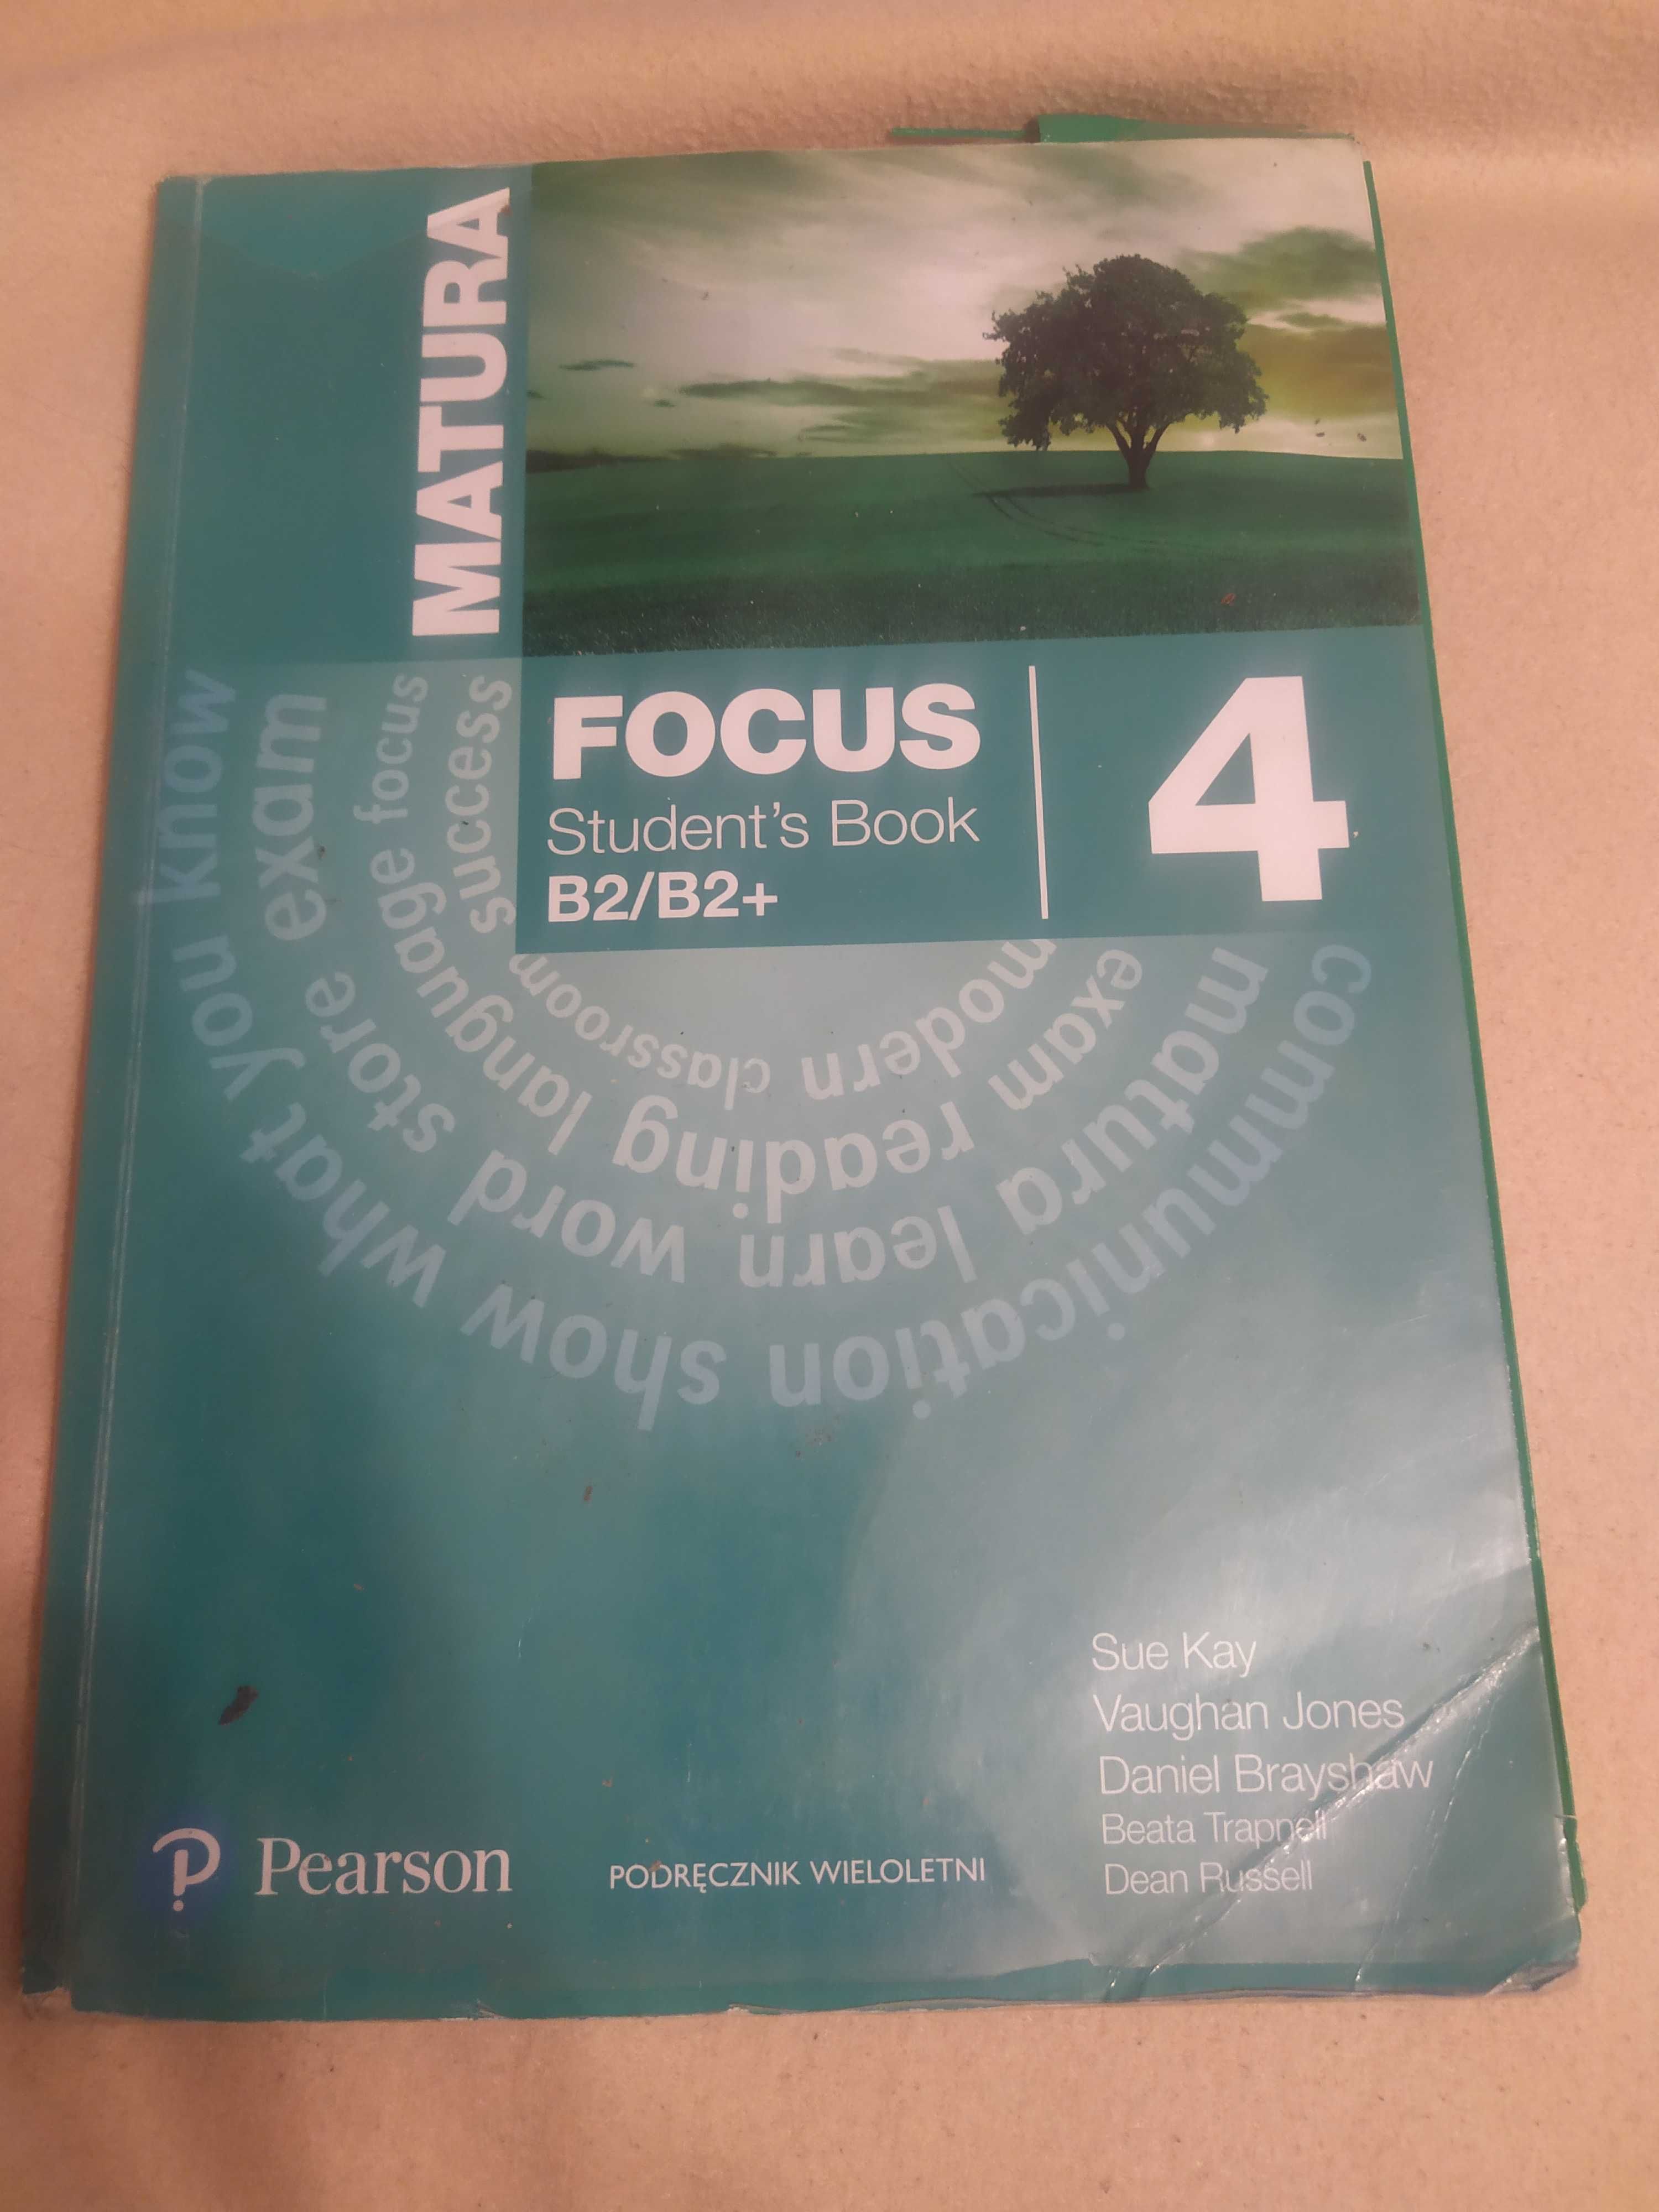 Fokus 4 B2/B2+, tylko student's book ANGIELSKI, WARSZAWA